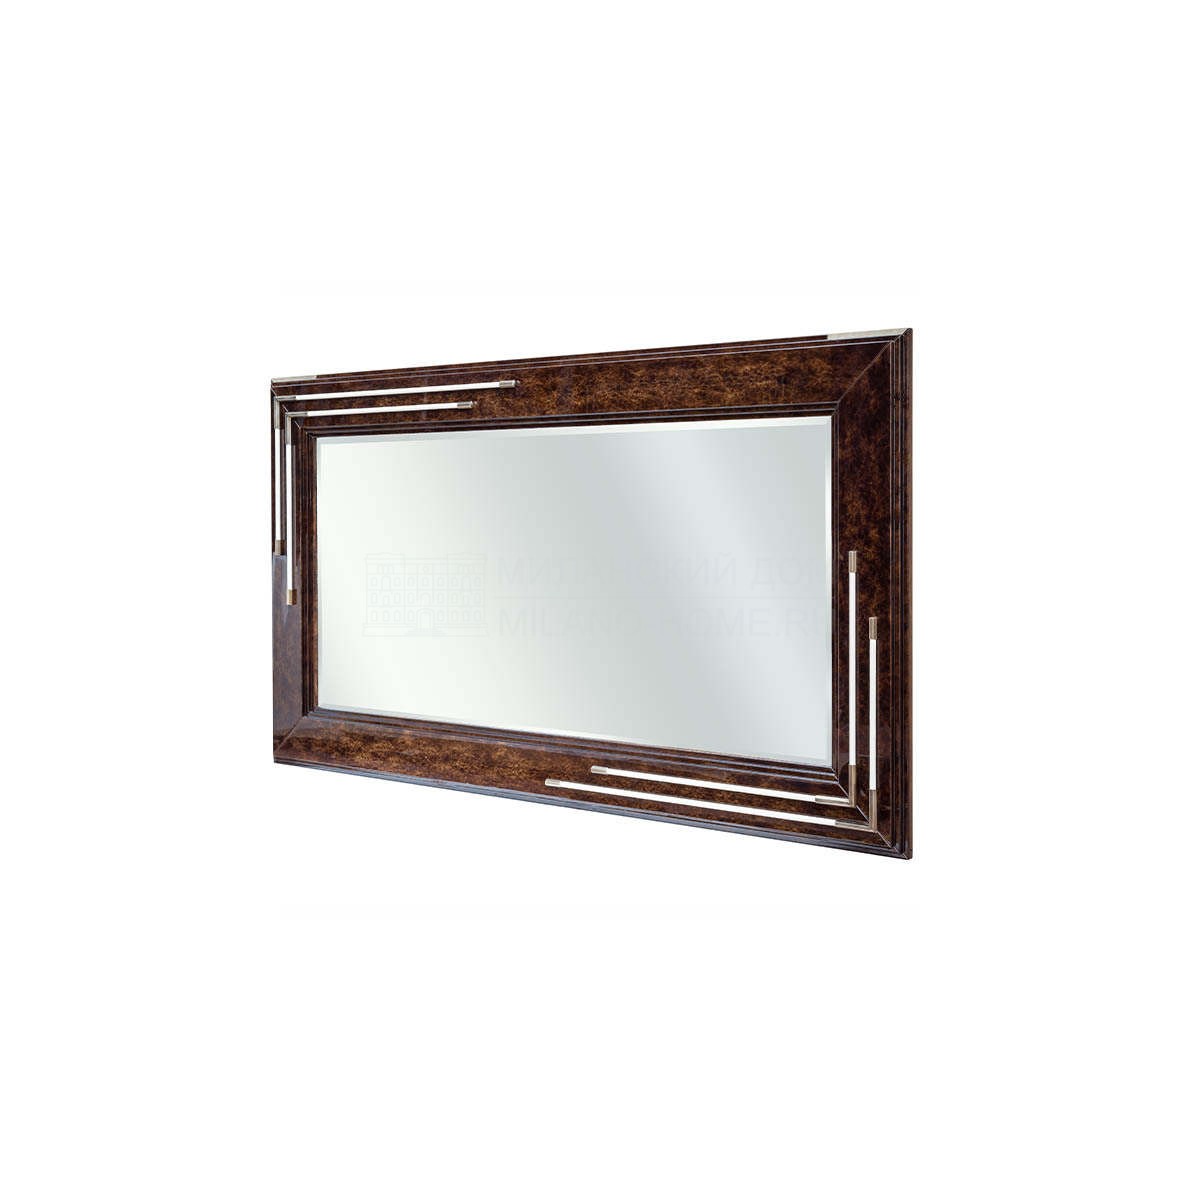 Зеркало настенное Noir mirror из Италии фабрики TURRI